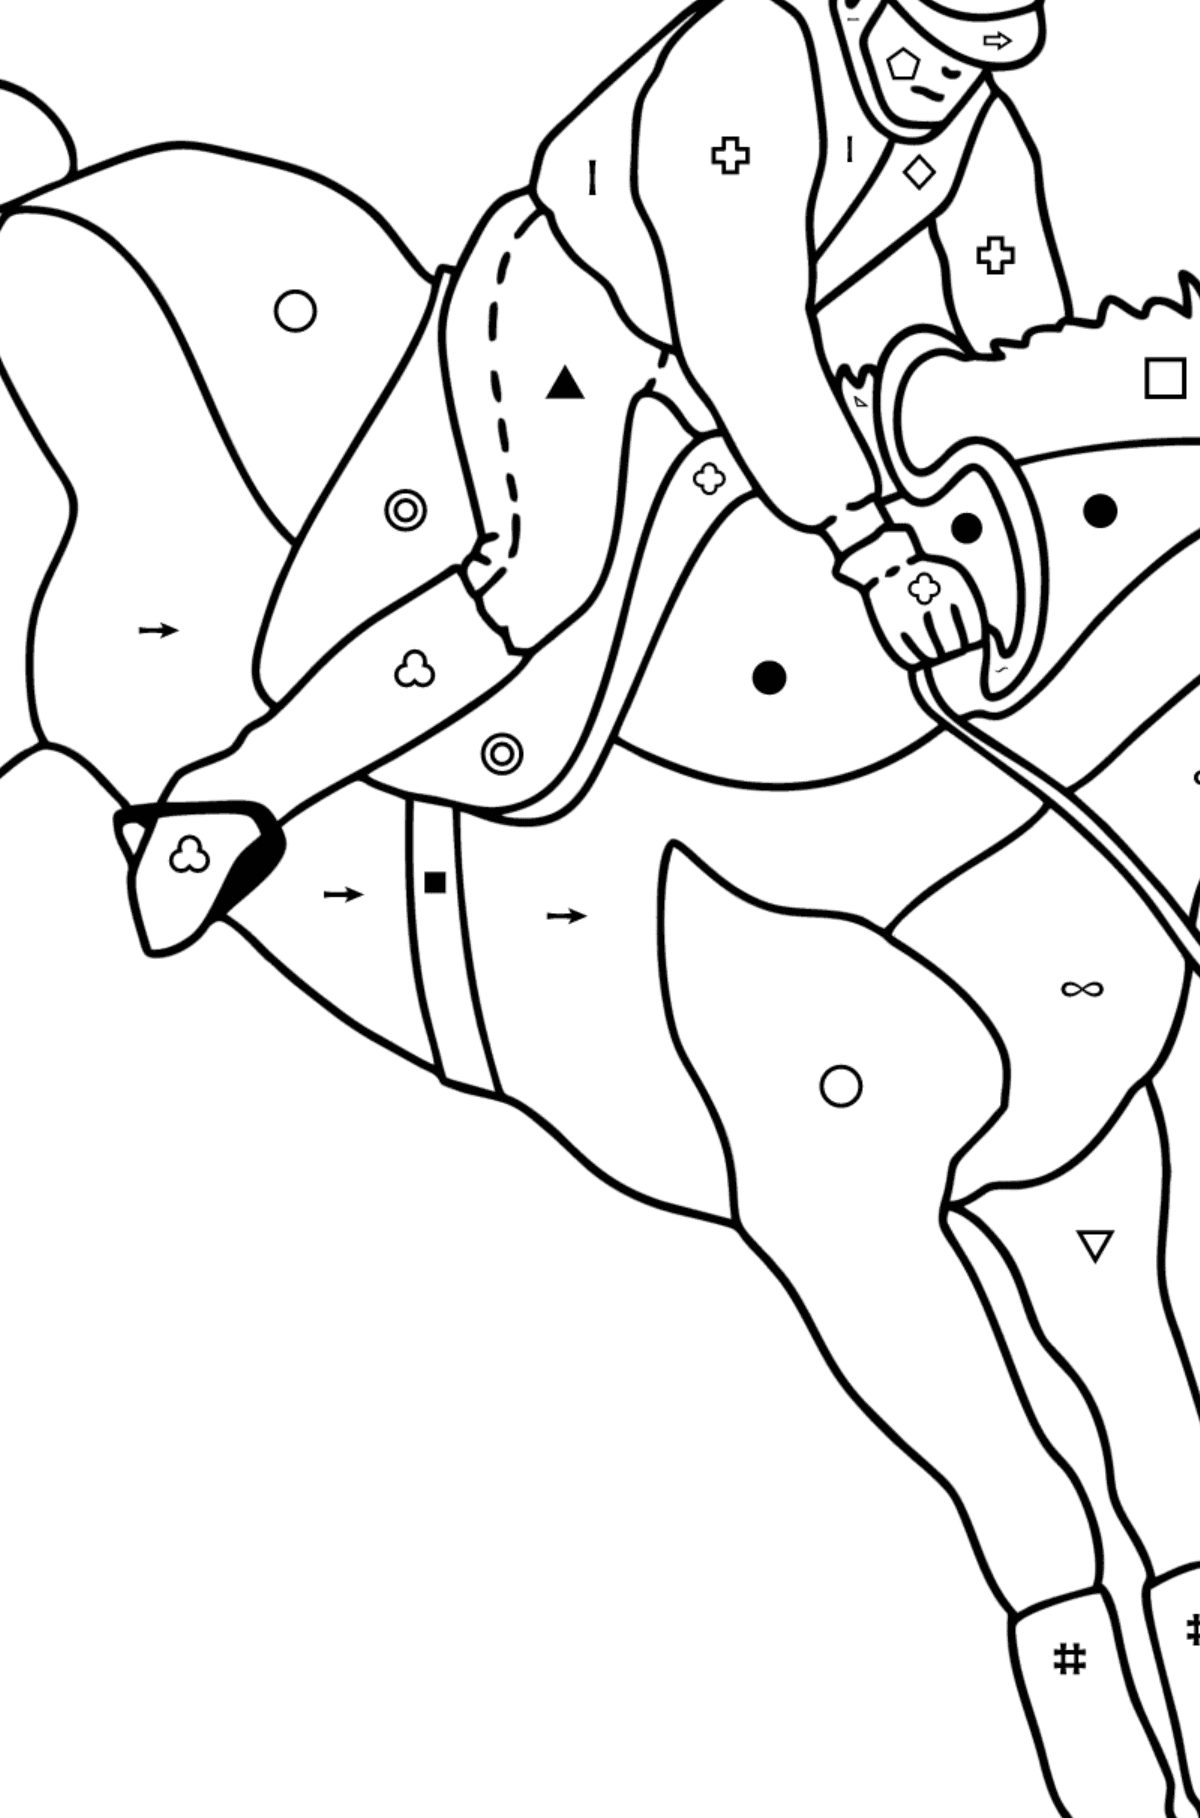 Mewarnai gambar Menunggang kuda - Pewarnaan mengikuti Simbol dan Bentuk Geometri untuk anak-anak